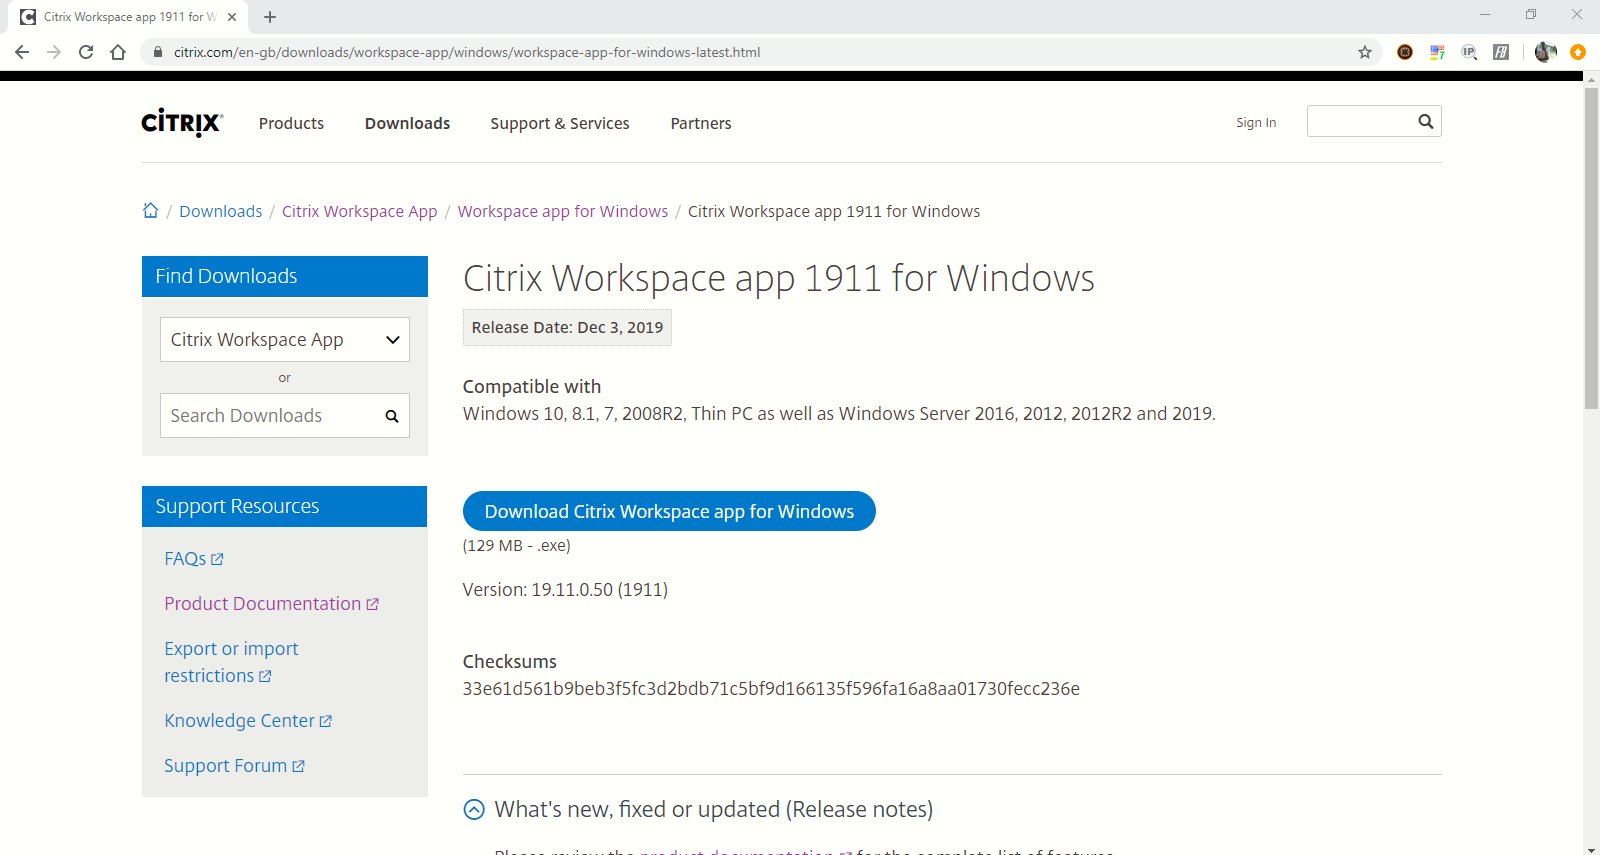 Image 2: Citrix Website Windows Download Page